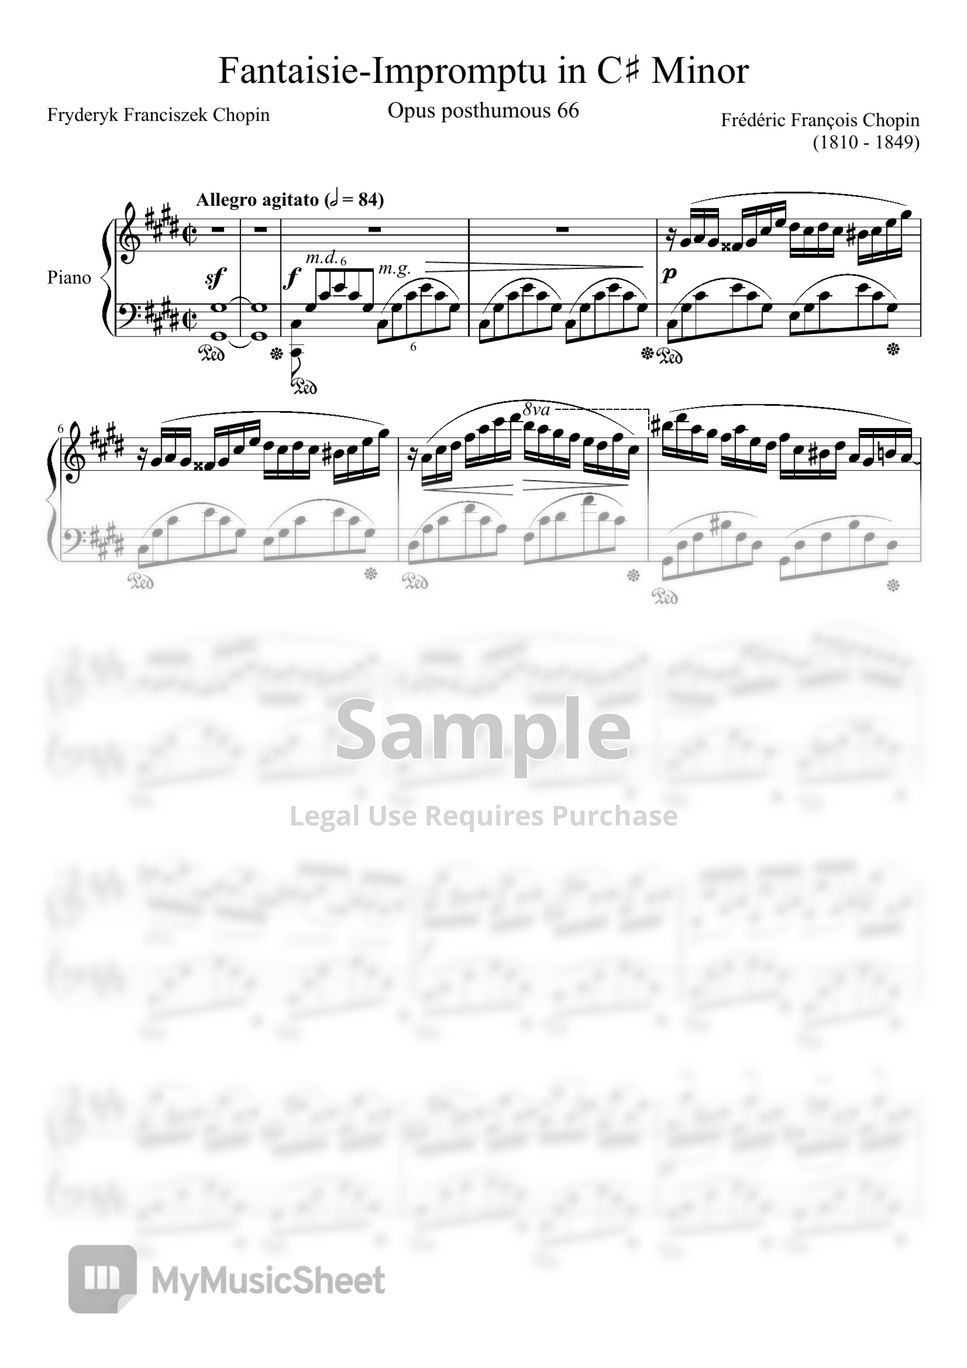 F. Chopin (쇼팽) - Fantasy impromptu Op.66 in C# minor (즉흥 환상곡) by JUNPIN